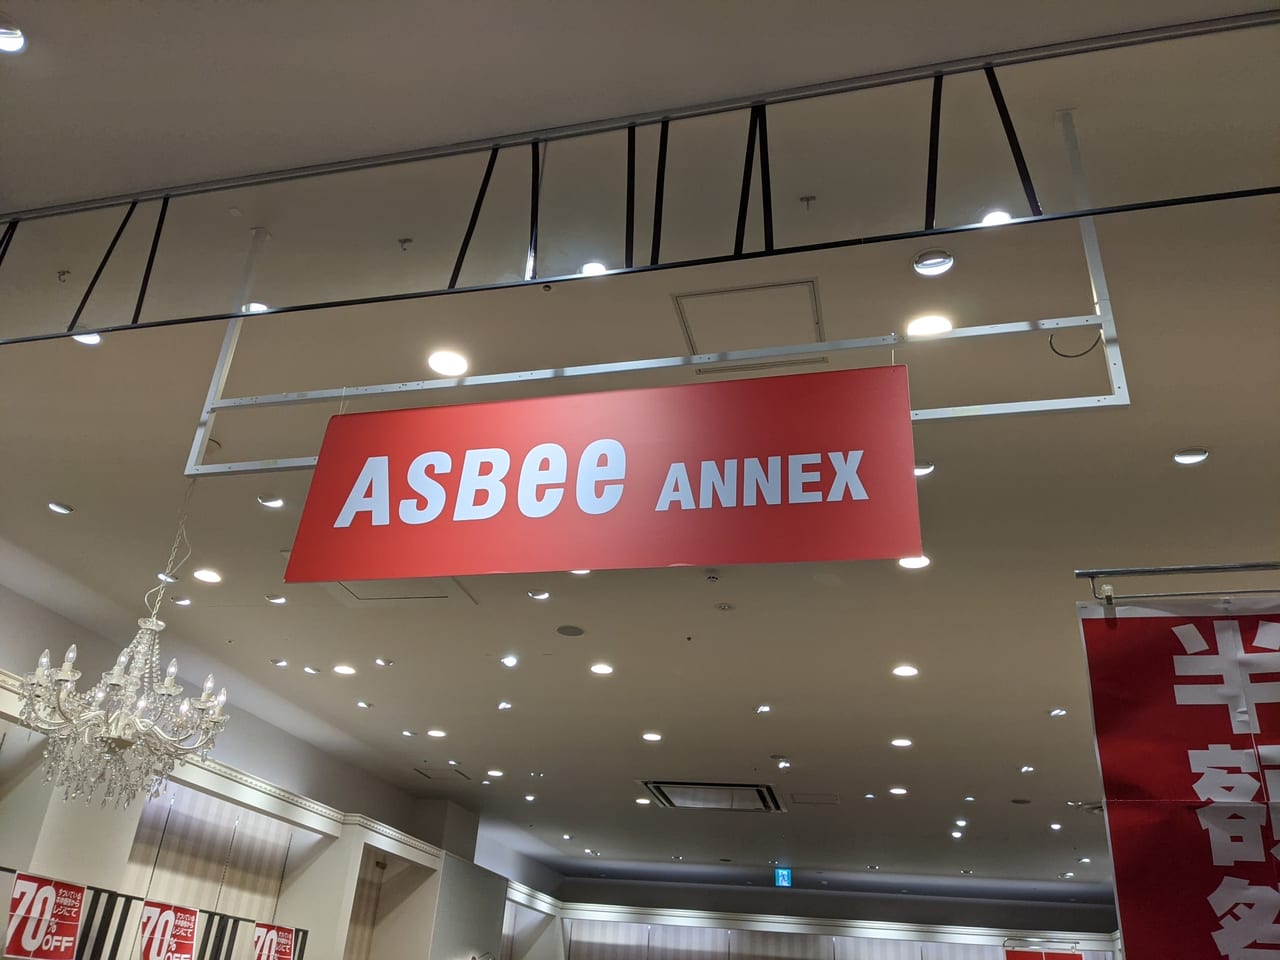 ASBEE ANNEX